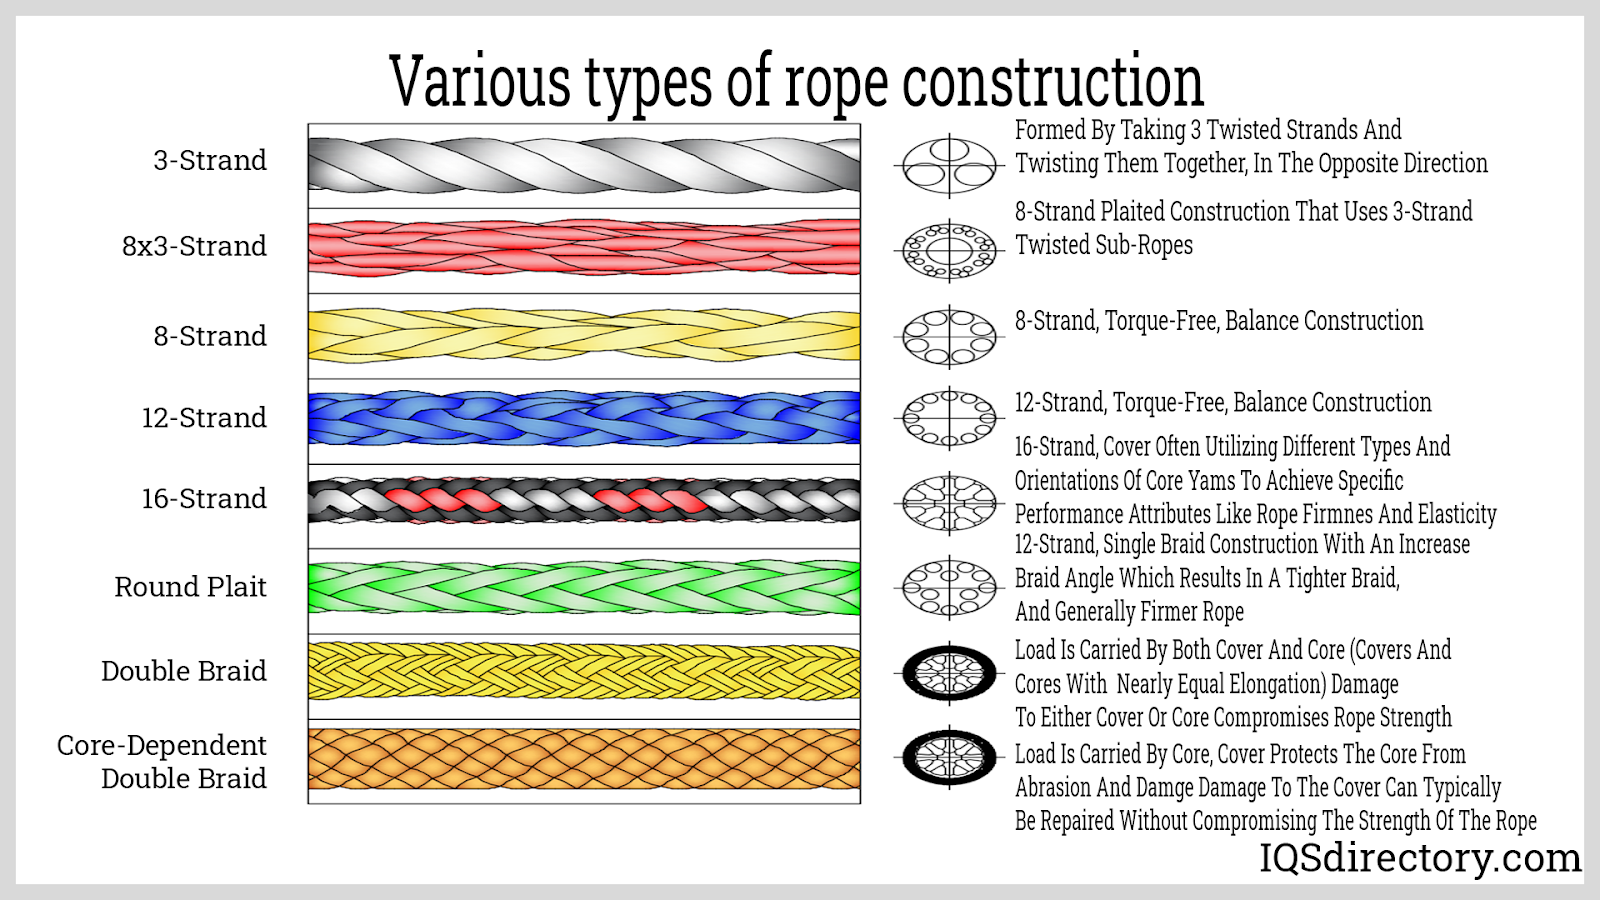 Rope Chain